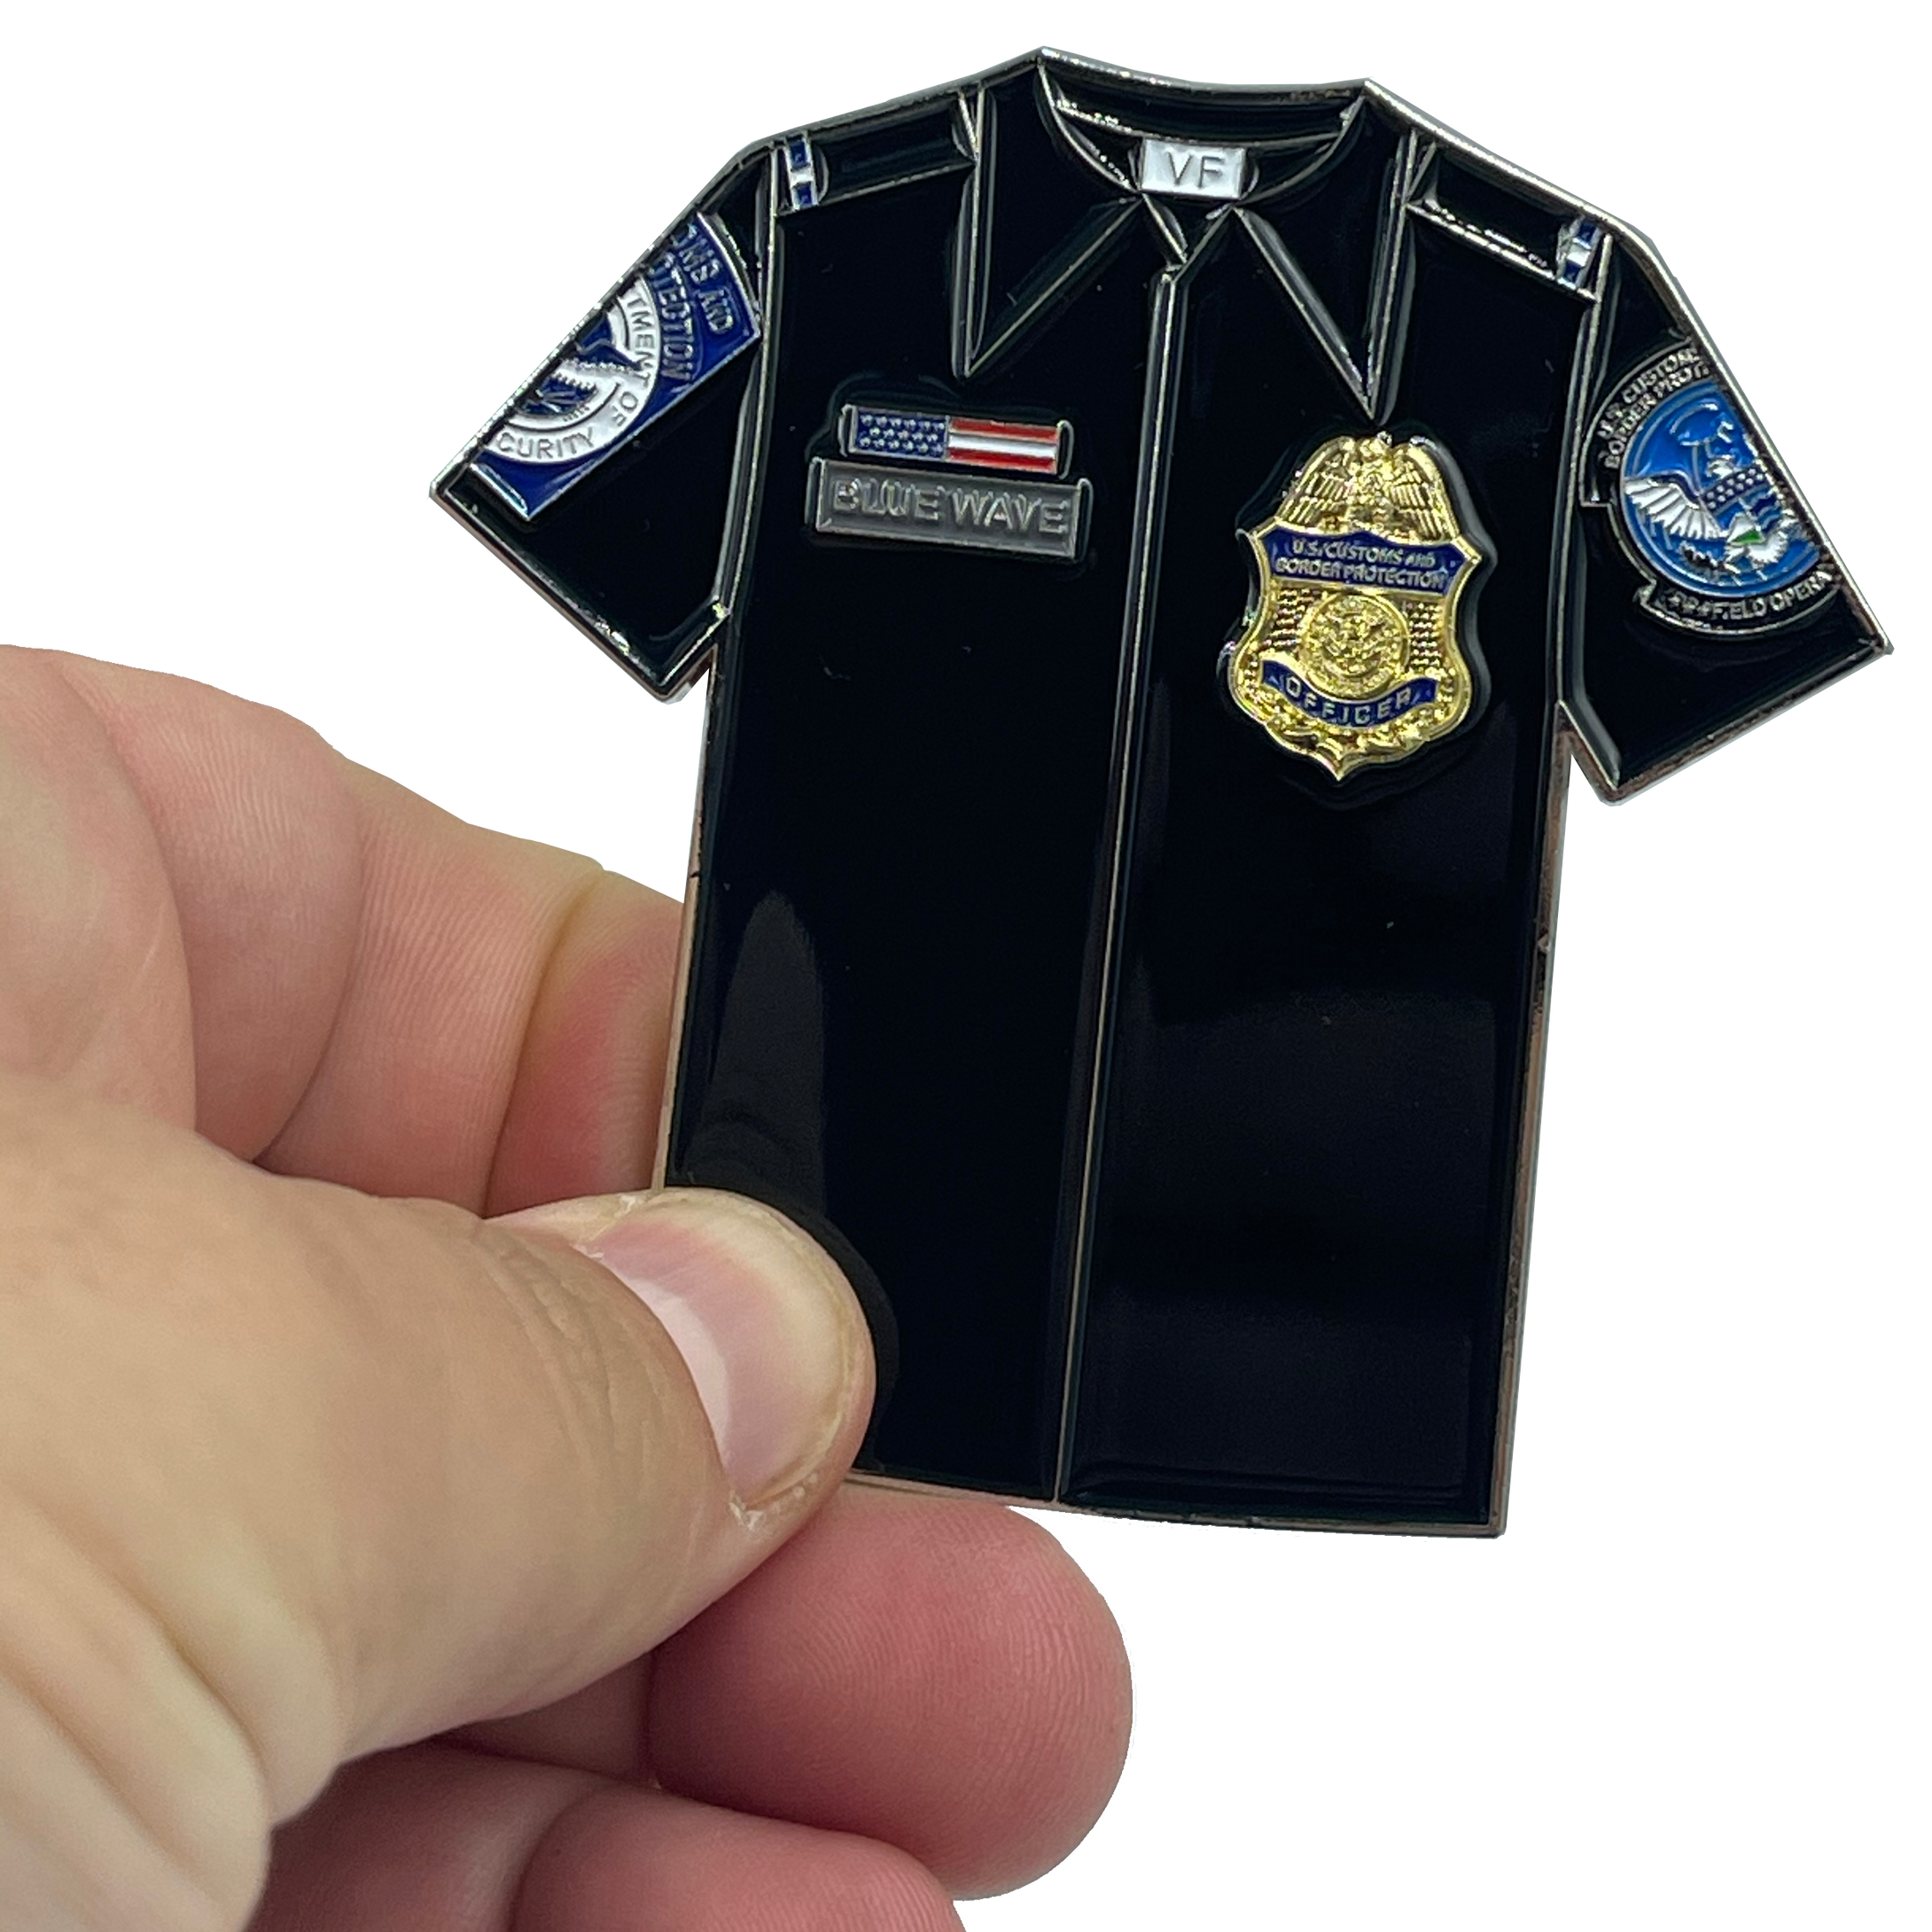 BL4-009 CBP Officer Uniform Shirt Challenge Coin Thin Blue Line Field Ops OFO Field Operations CBPO